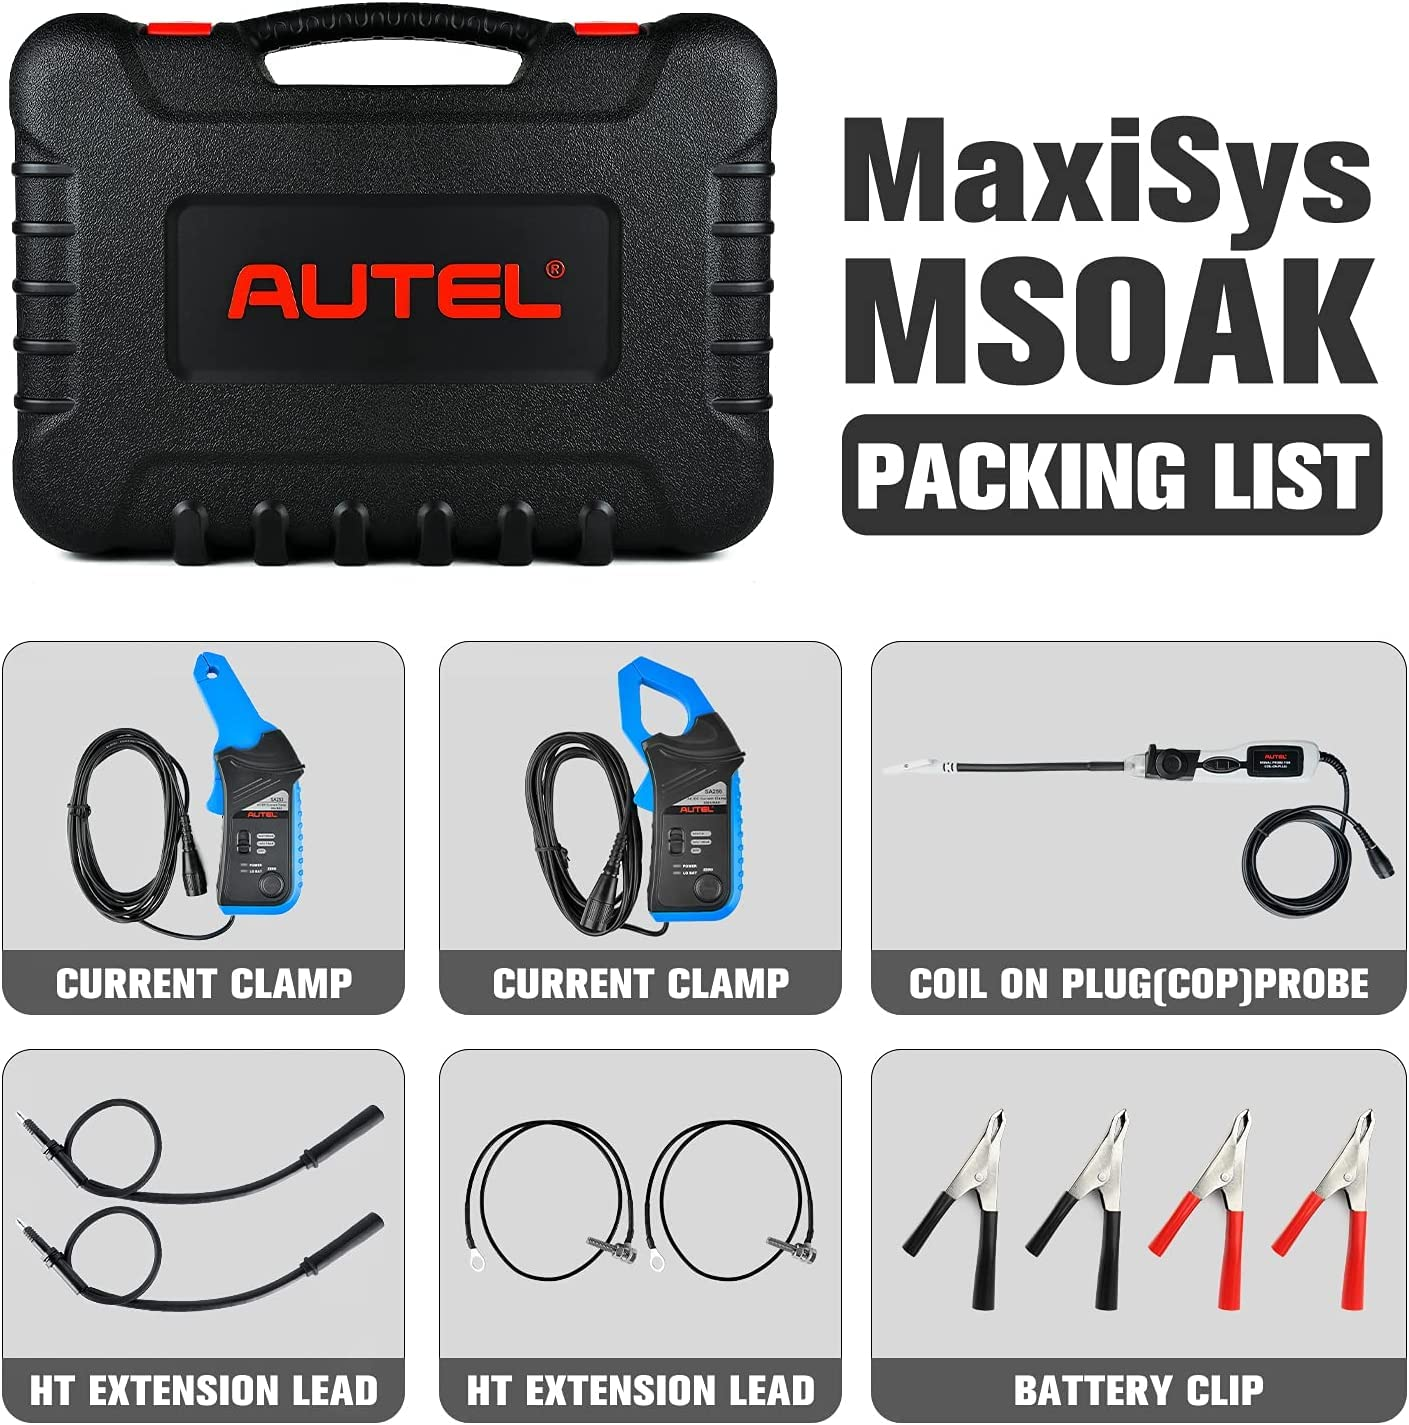 Autel MaxiSys MSOAK Oscilloscope Accessory packing list